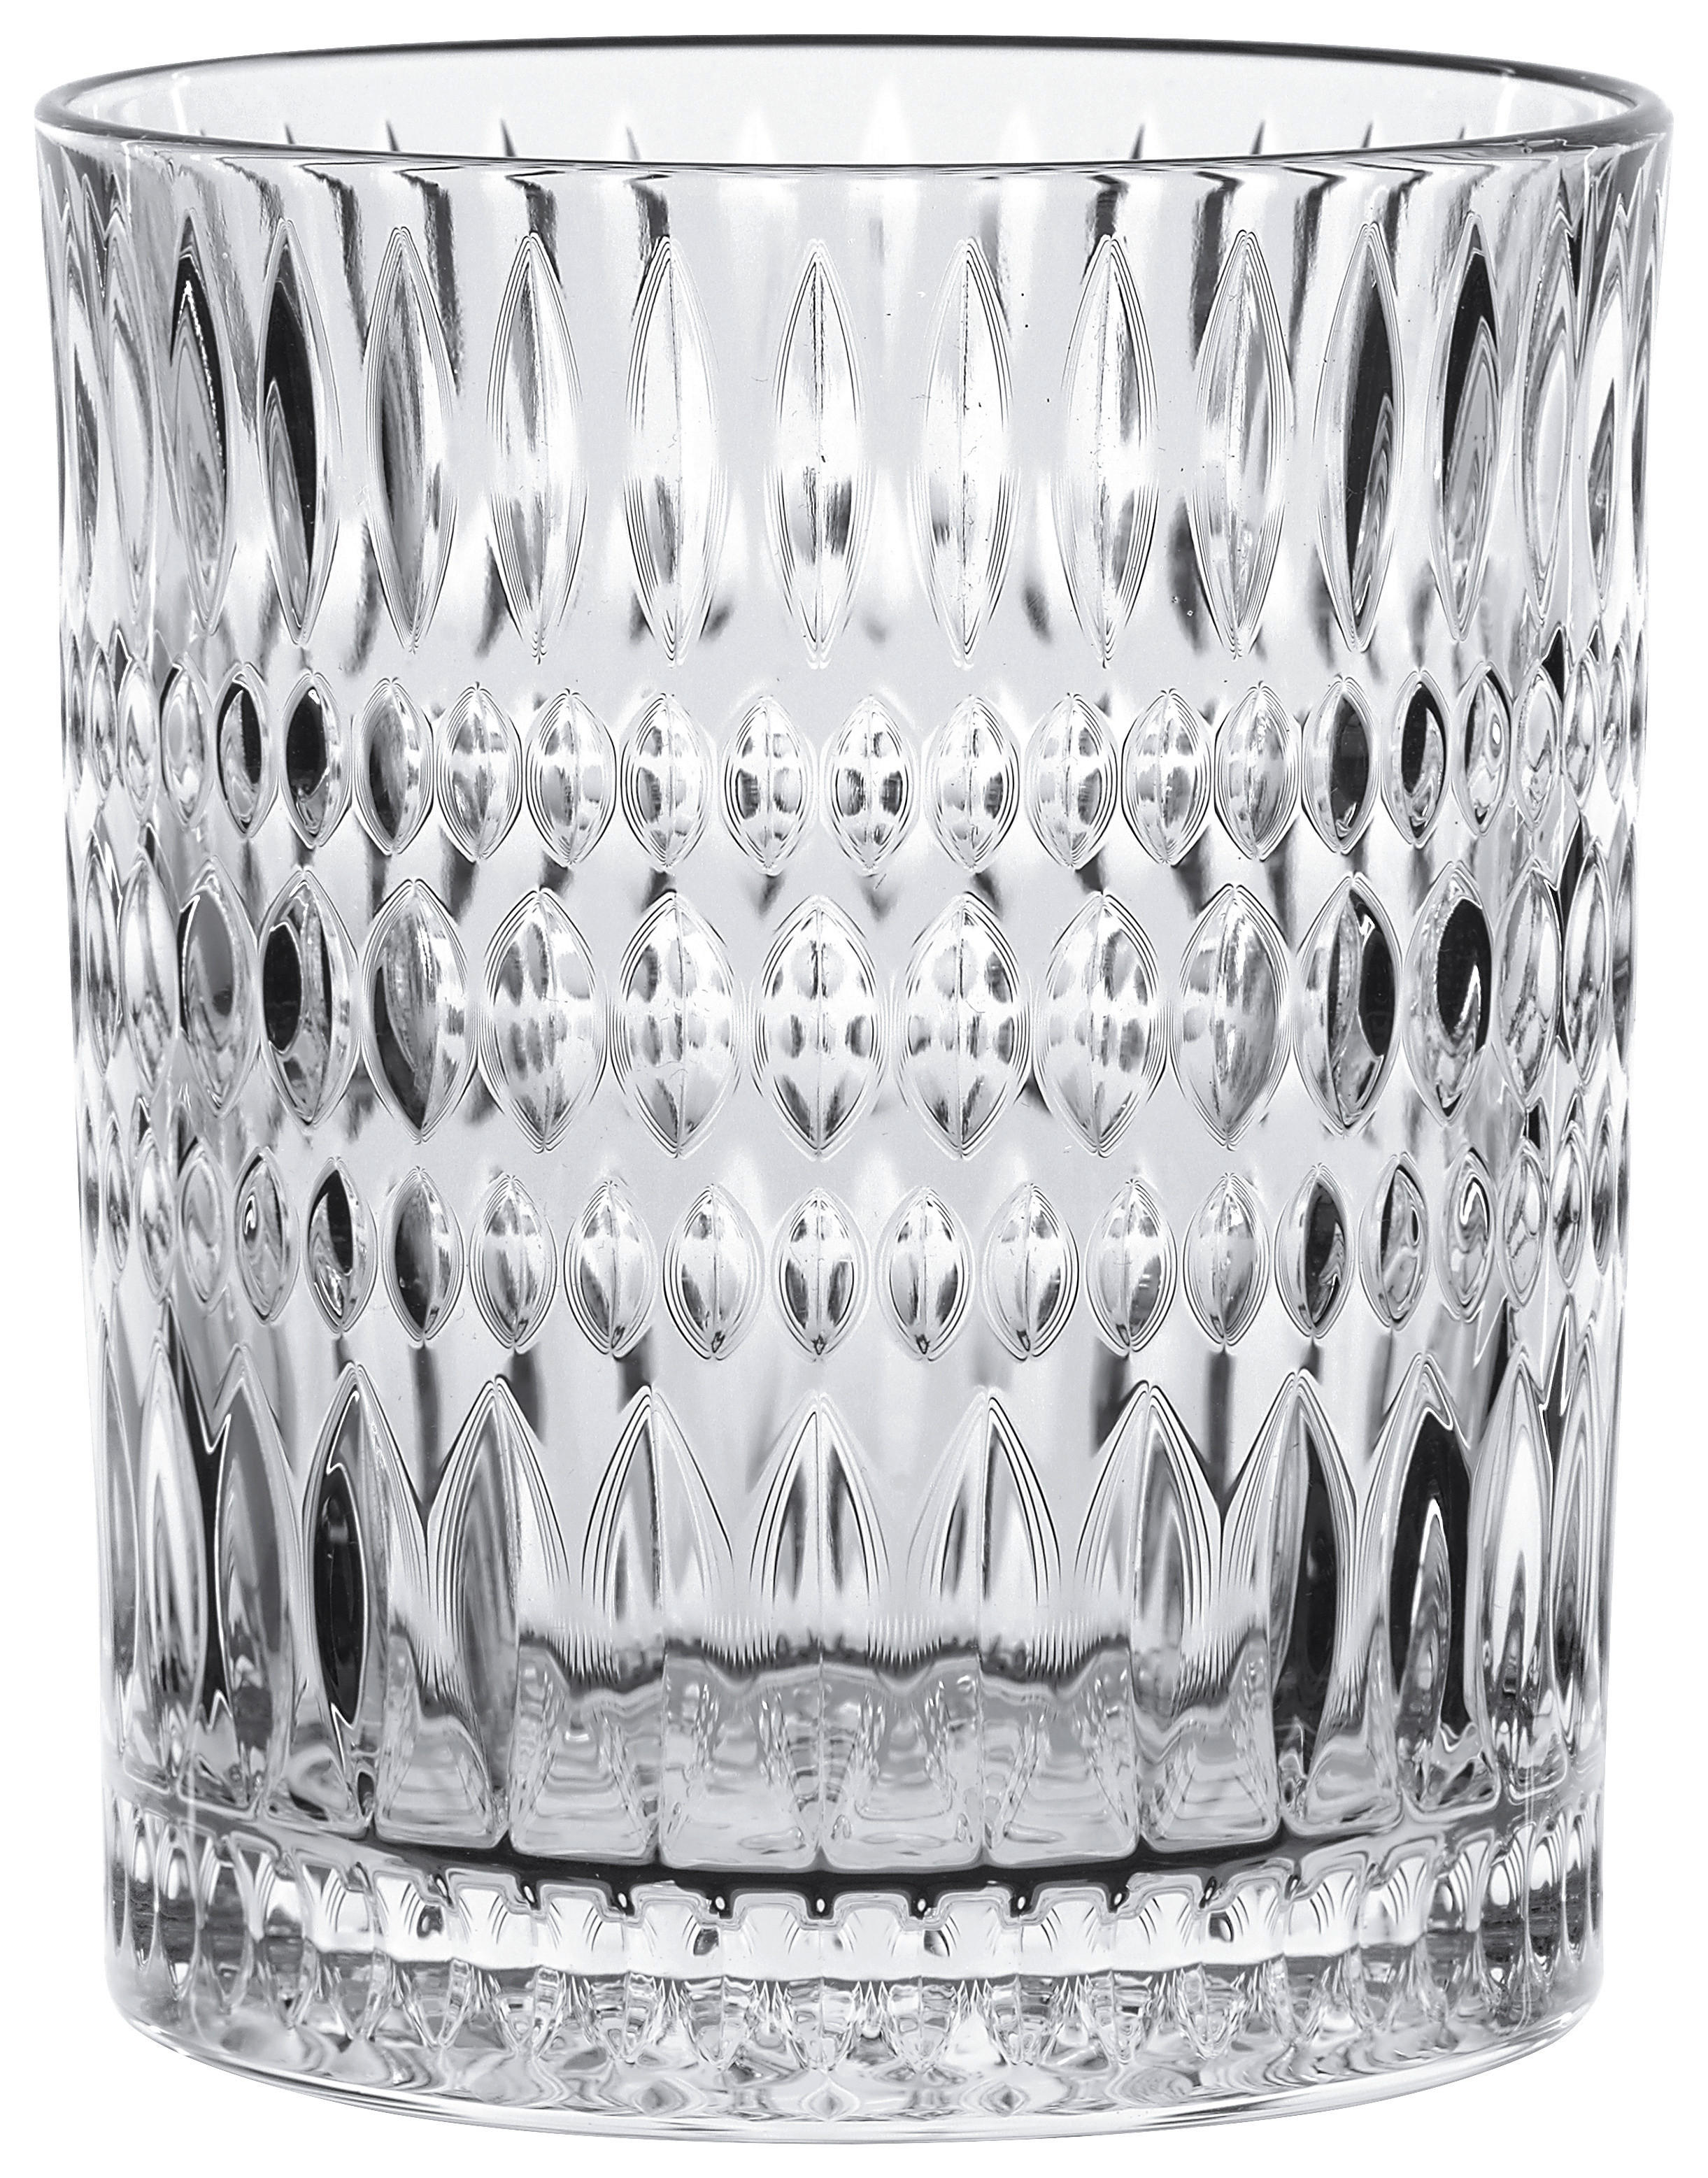 GLÄSERSET Ethno  4-teilig  - Transparent, LIFESTYLE, Glas (8,2/9,4/8,2cm) - Nachtmann